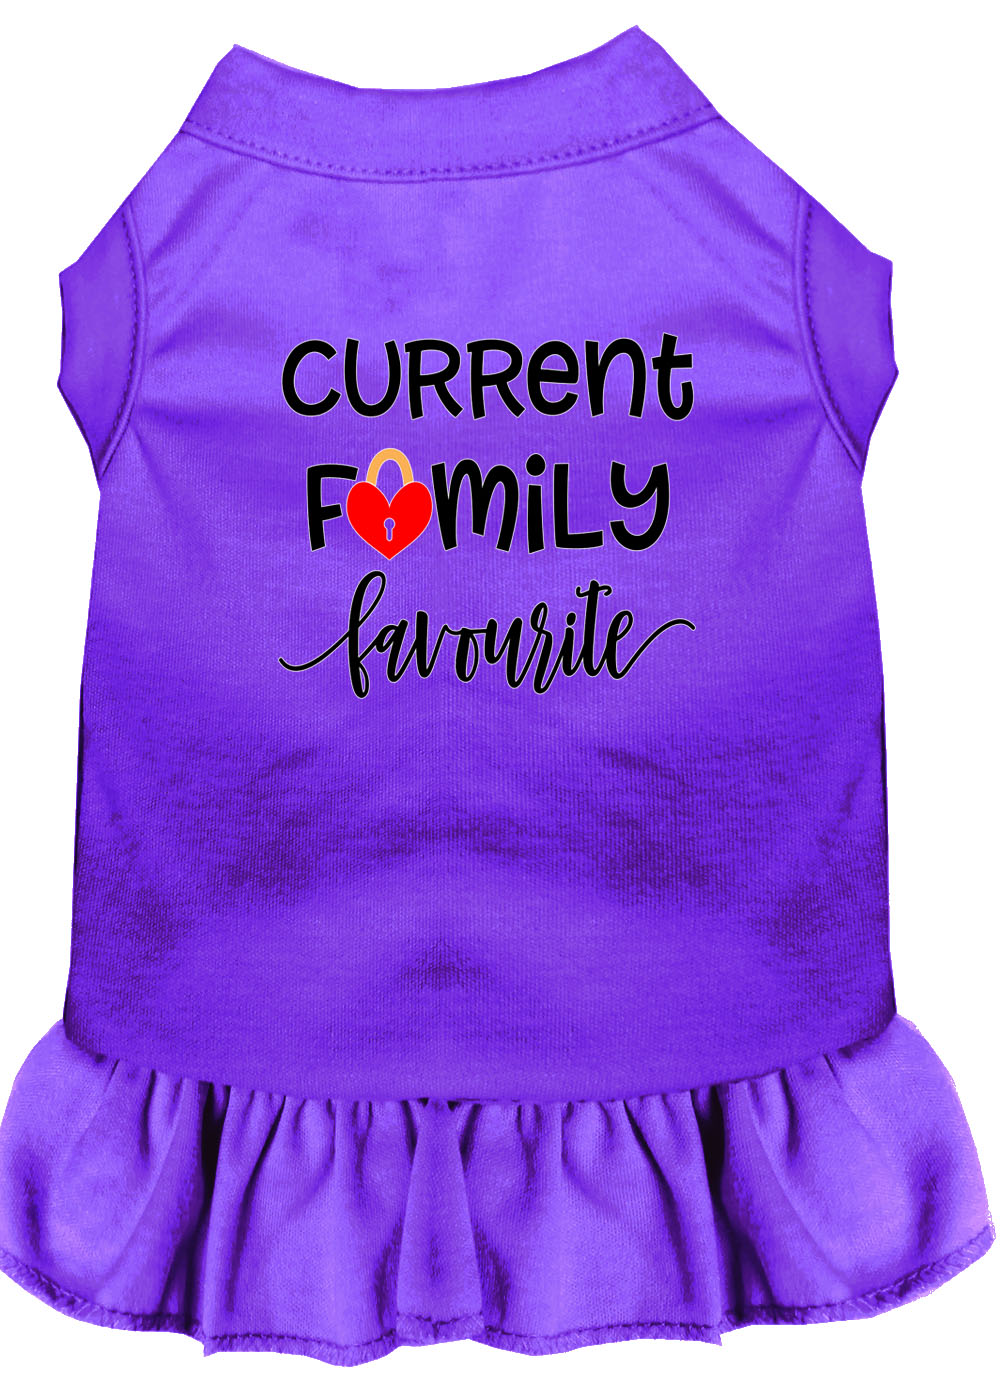 Family Favorite Screen Print Dog Dress Purple XL